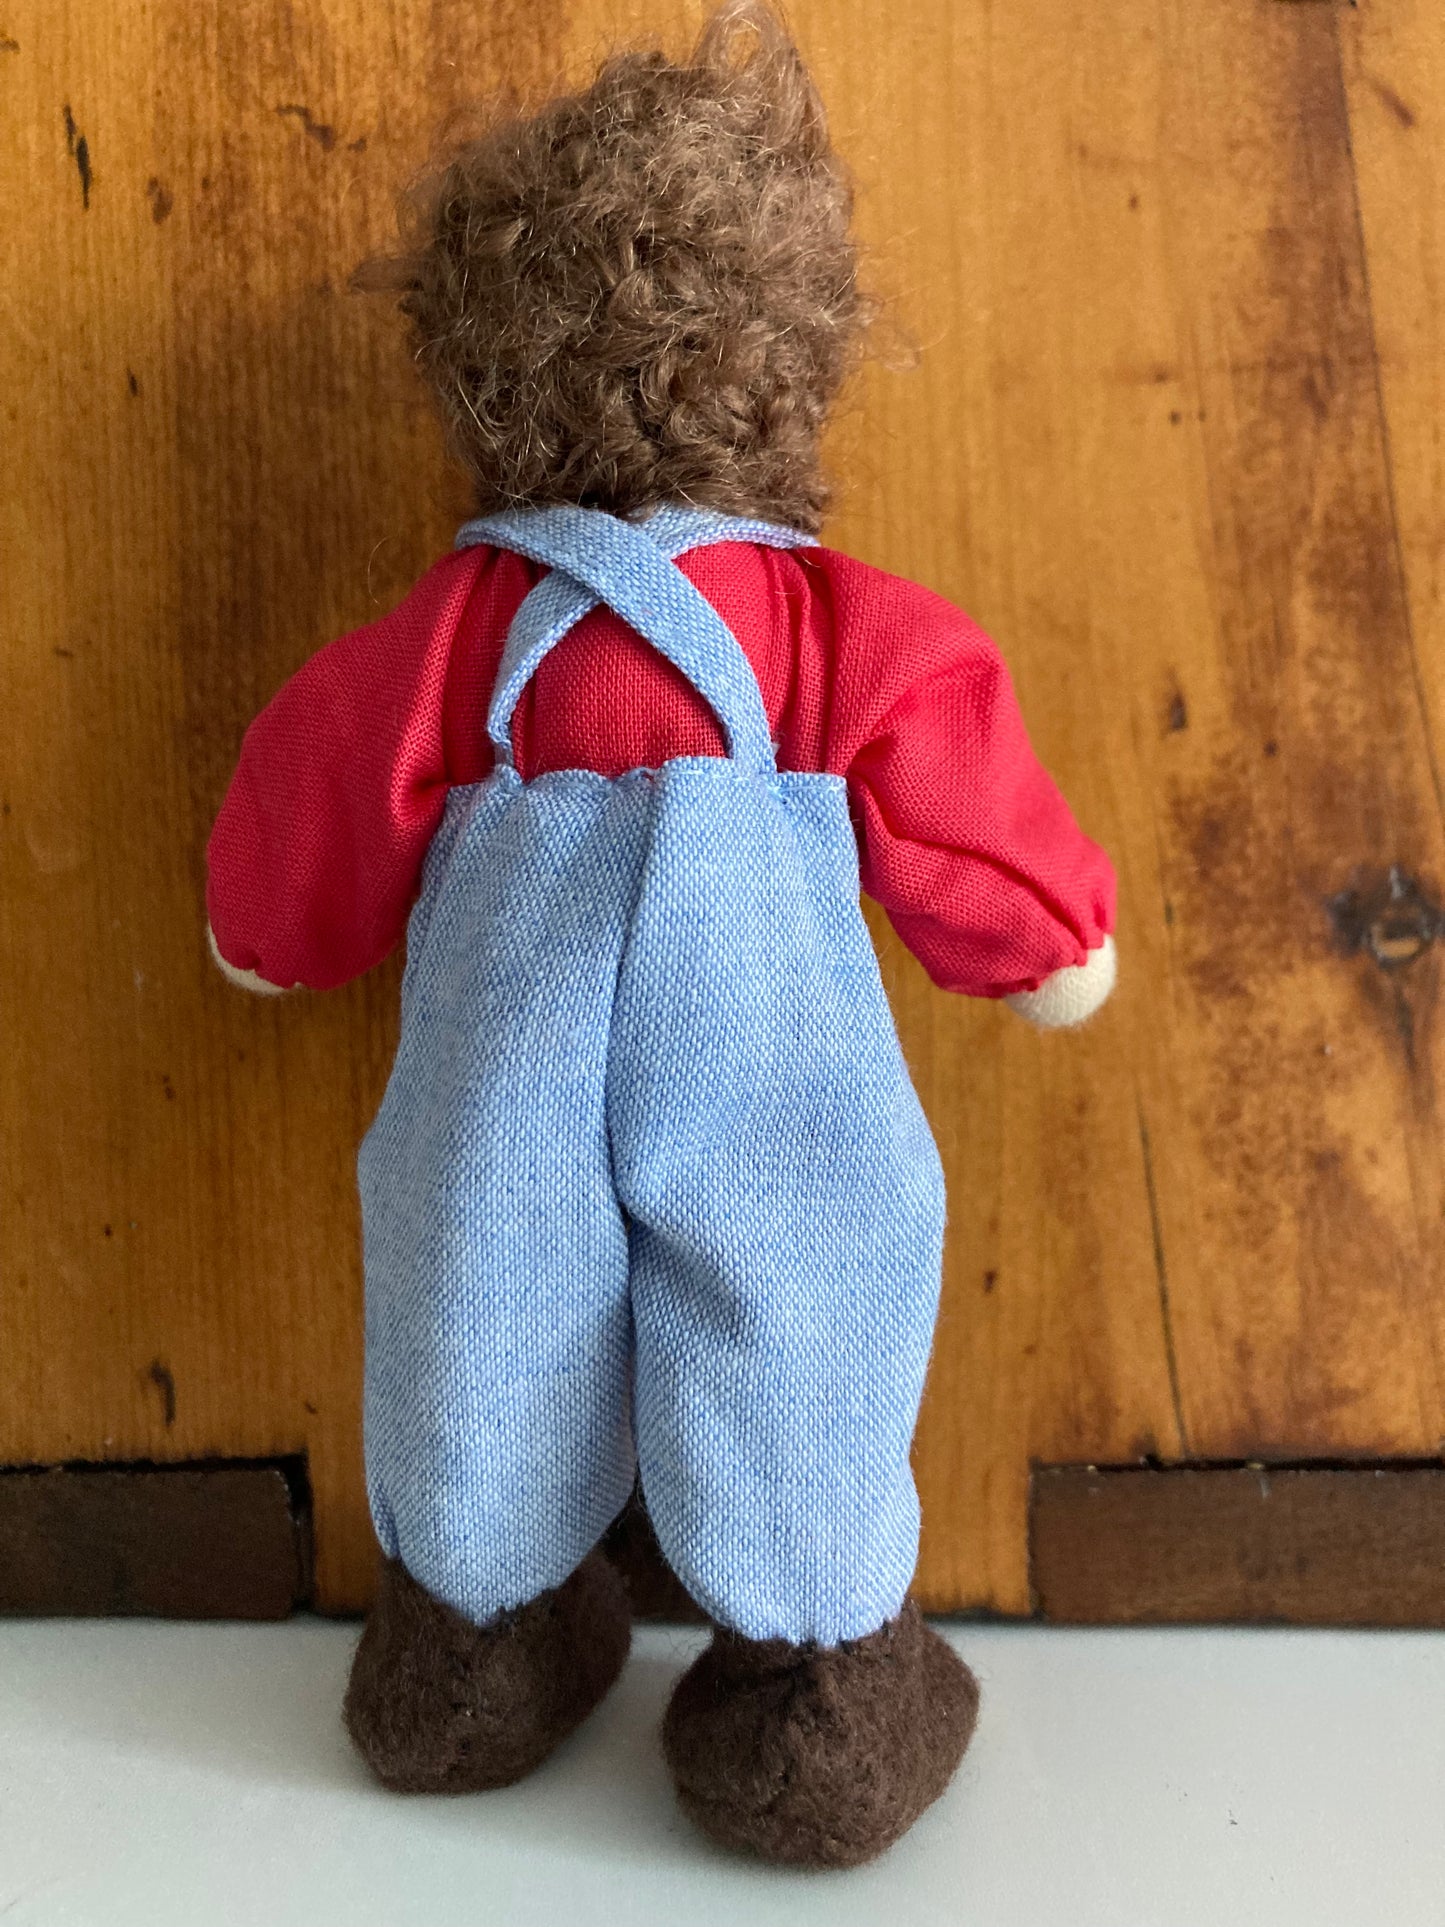 Dollhouse Waldorf Doll - Grimm's ALDER CHILD in PANTS